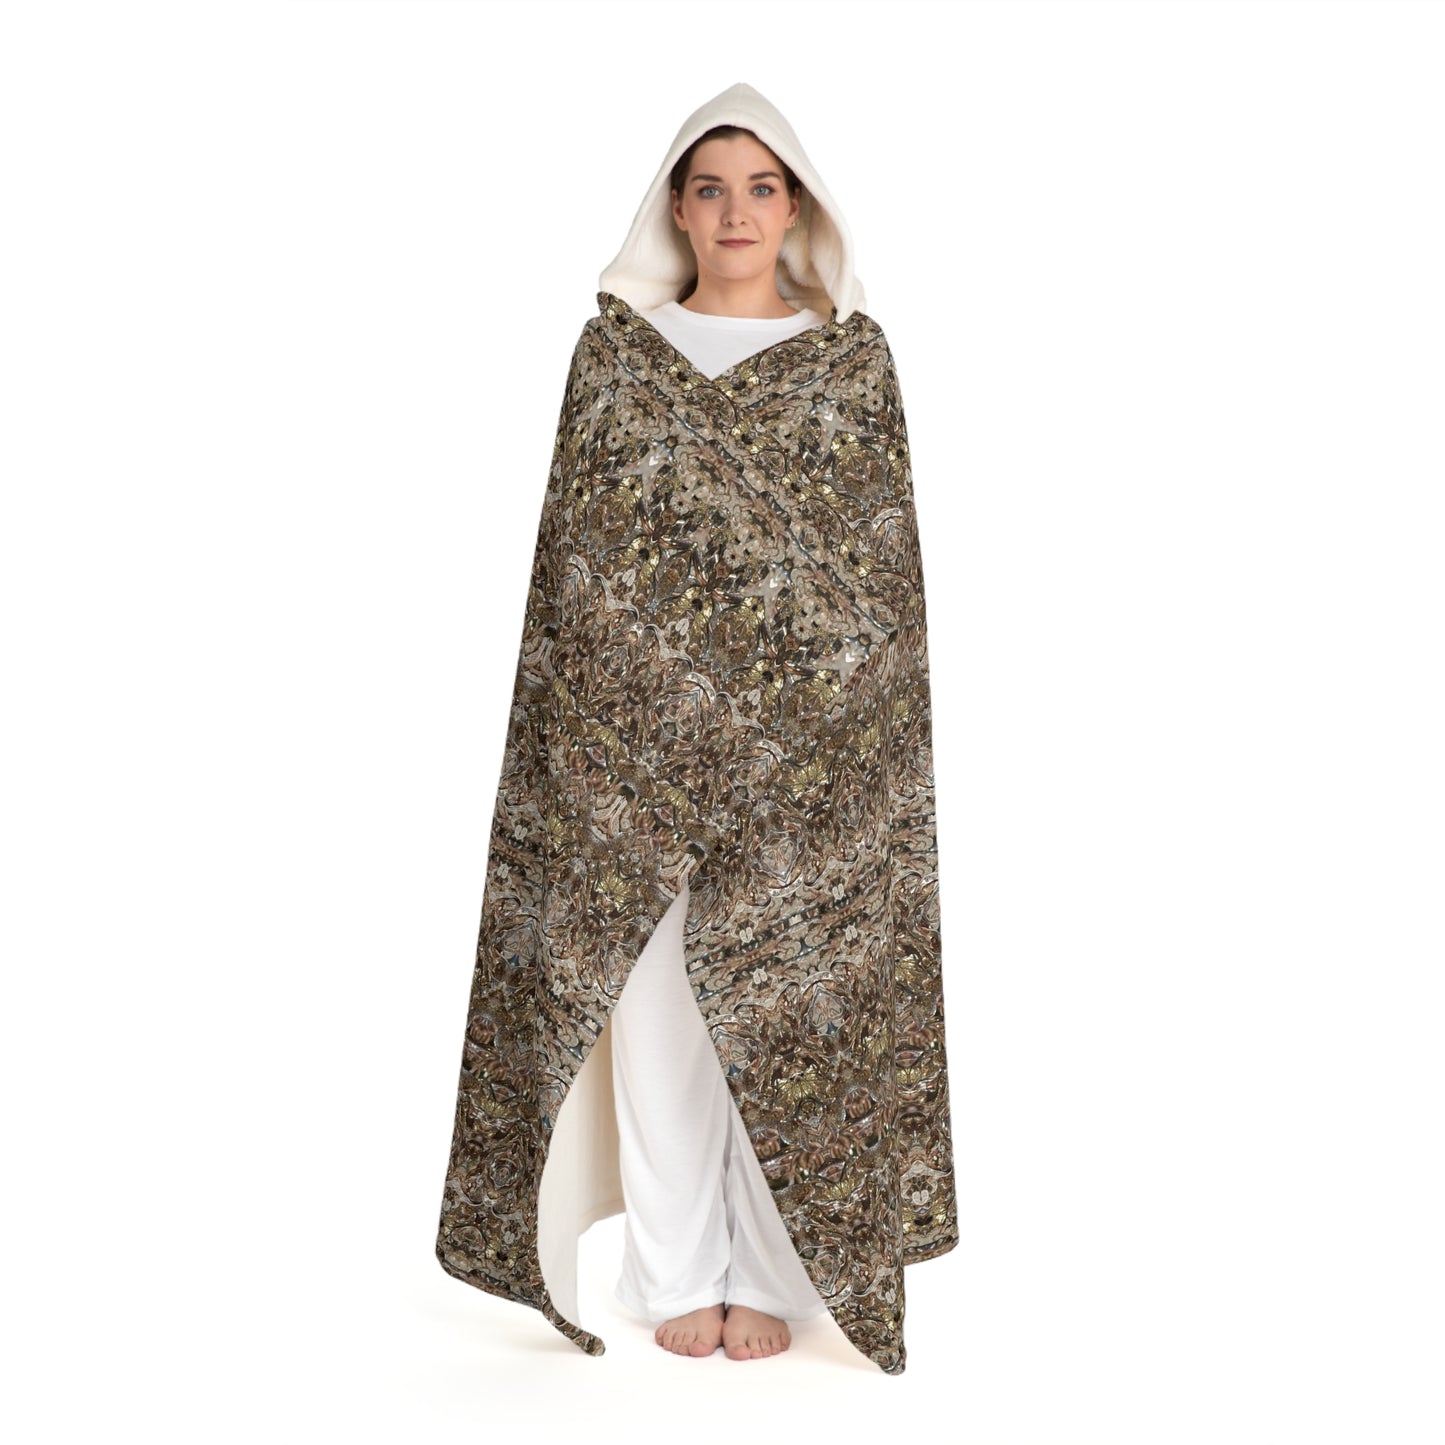 Cream Hooded Sherpa Fleece Blanket (Samhain Dream Thaw 13 of 15 Tredecim ex Quindecim) RJSTHw2023 RJS